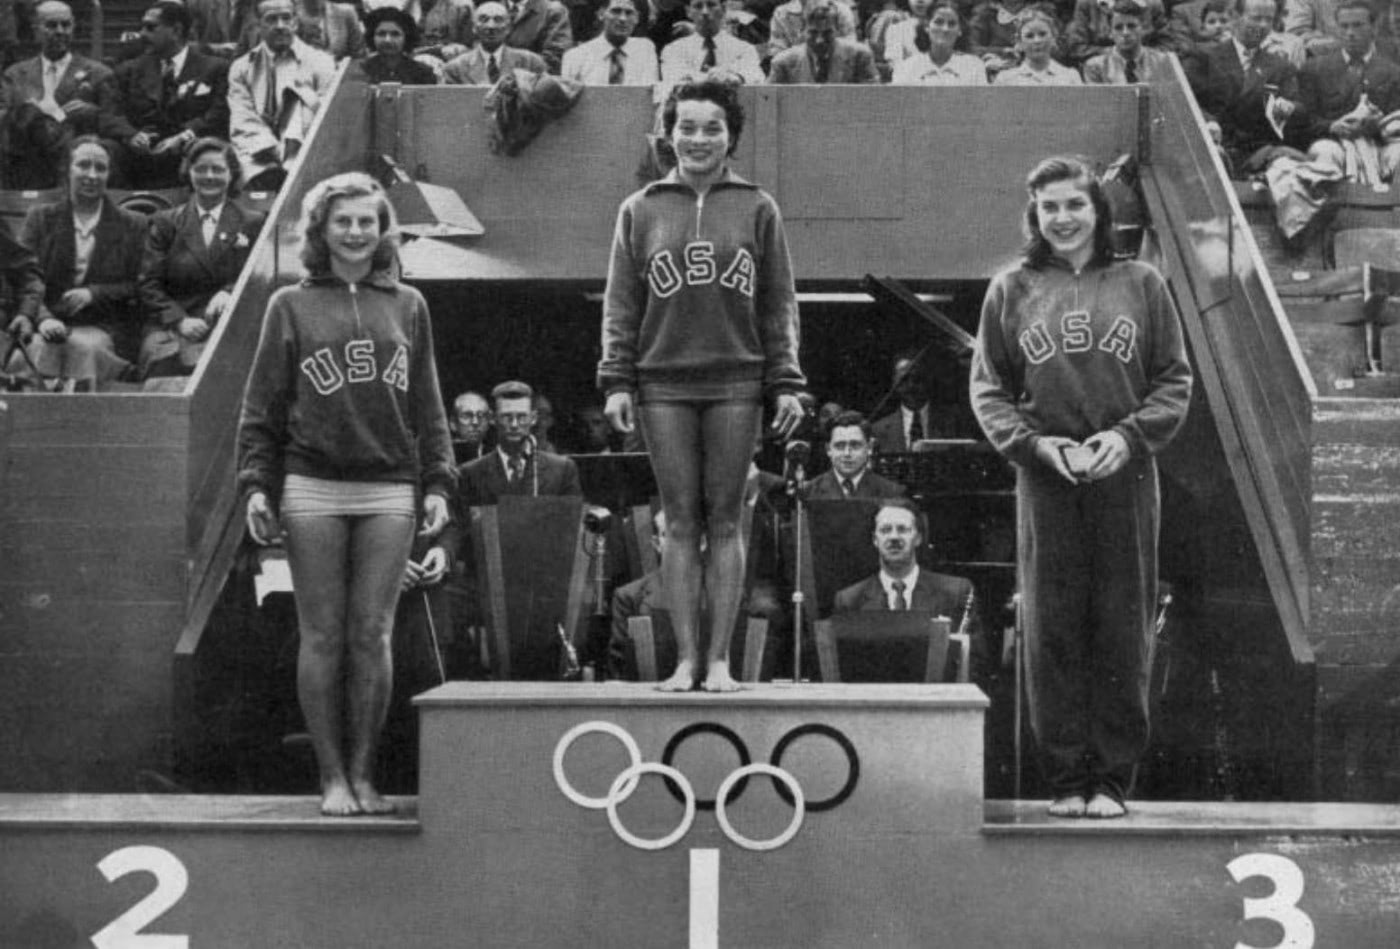 Olympics Memories and Women’s Empowerment